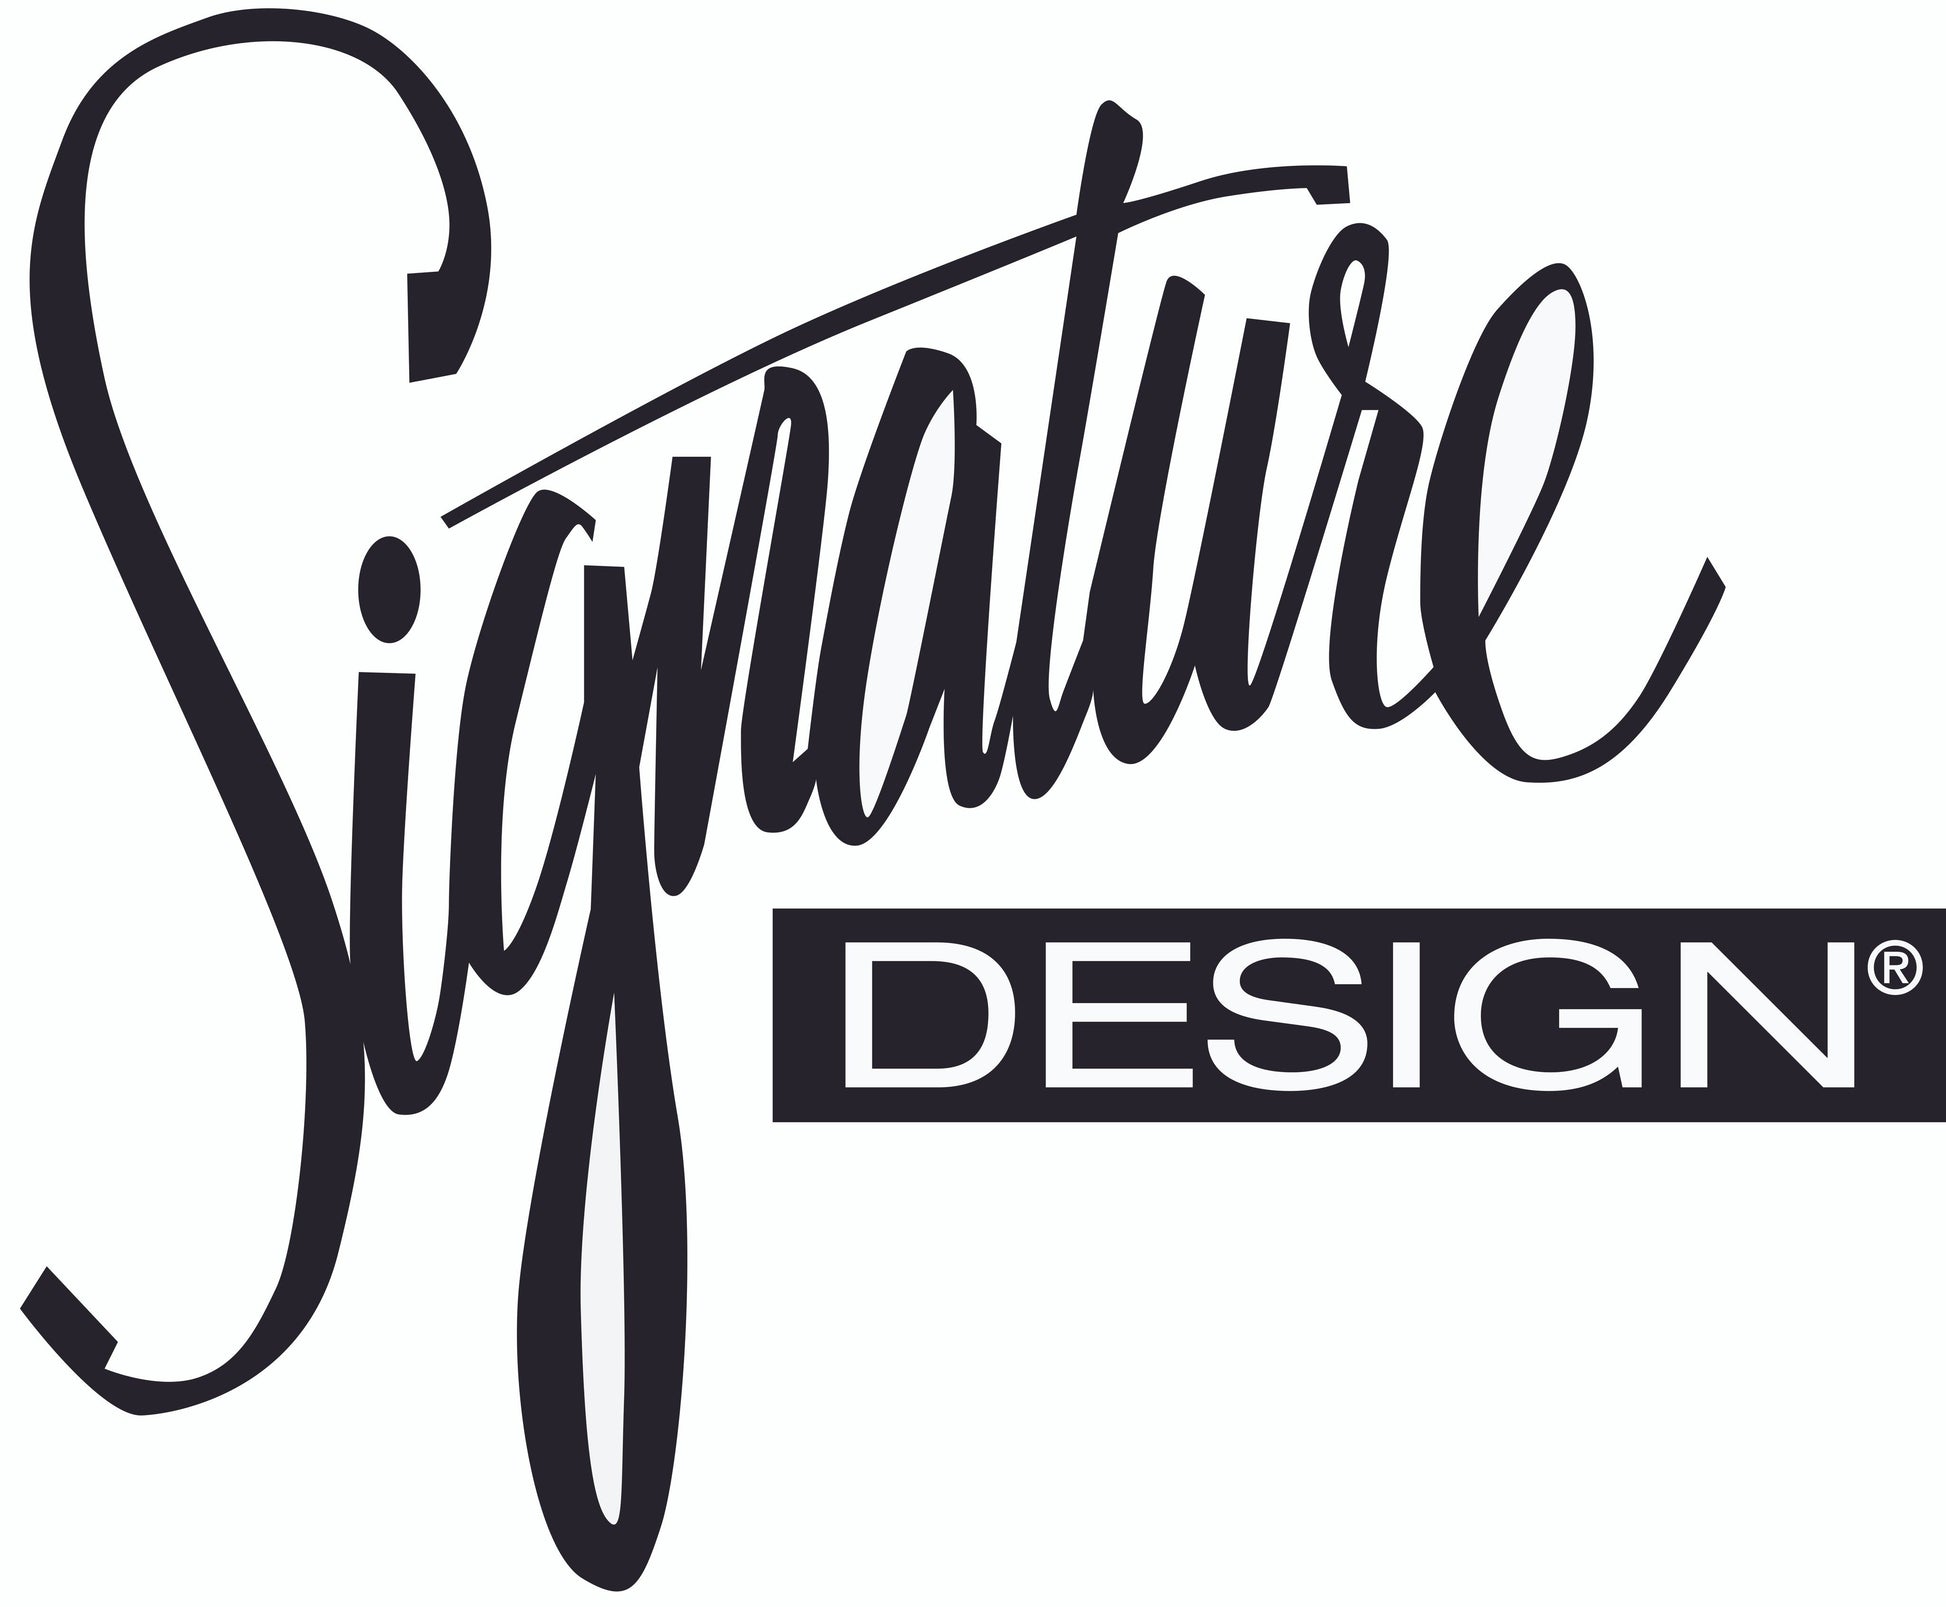 Rannis Queen Sofa Sleeper Signature Design by Ashley®